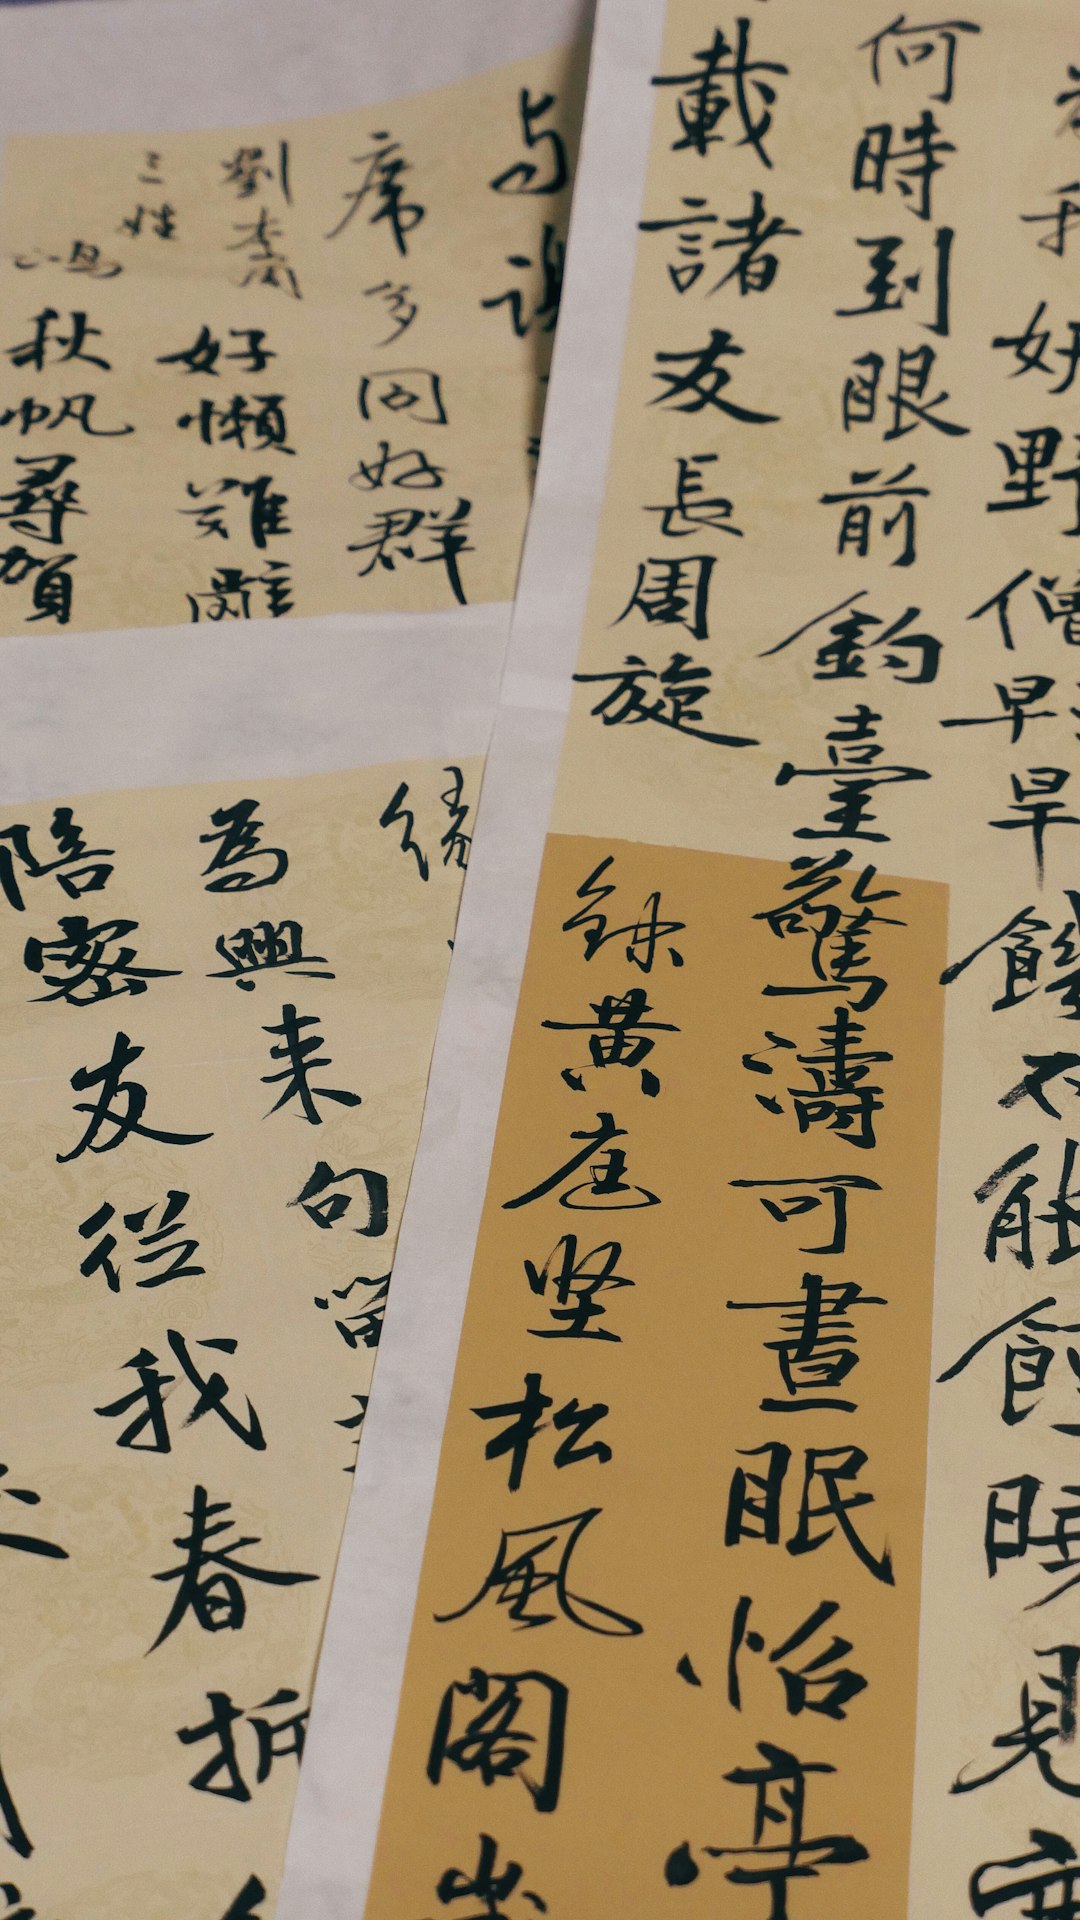 kanji scripts